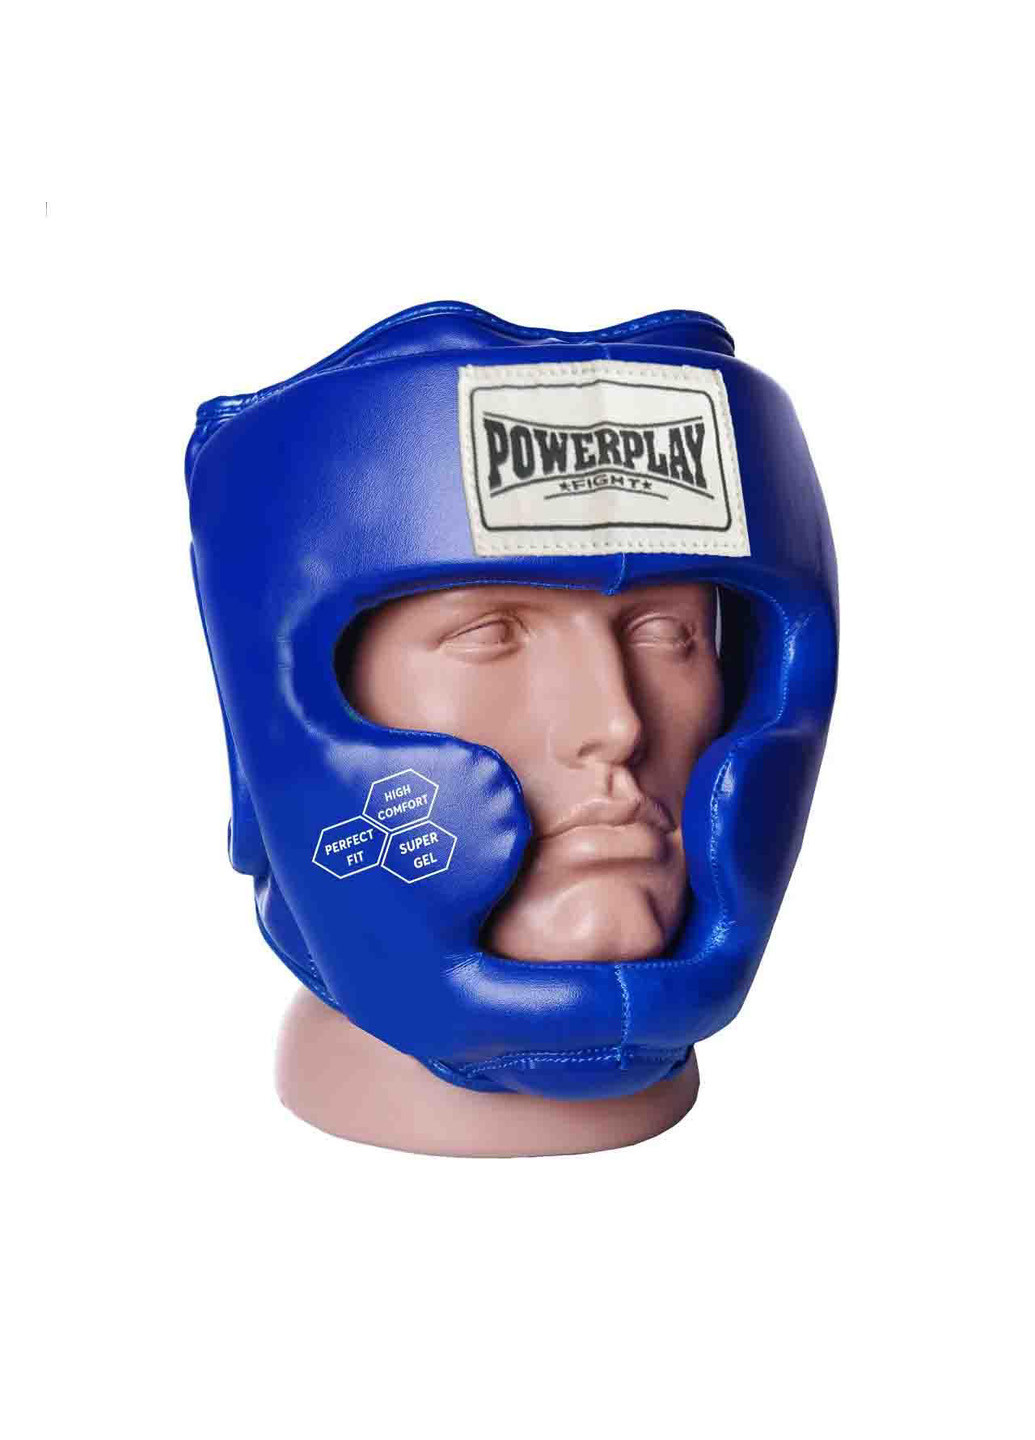 Боксерский шлем S PowerPlay (196422516)